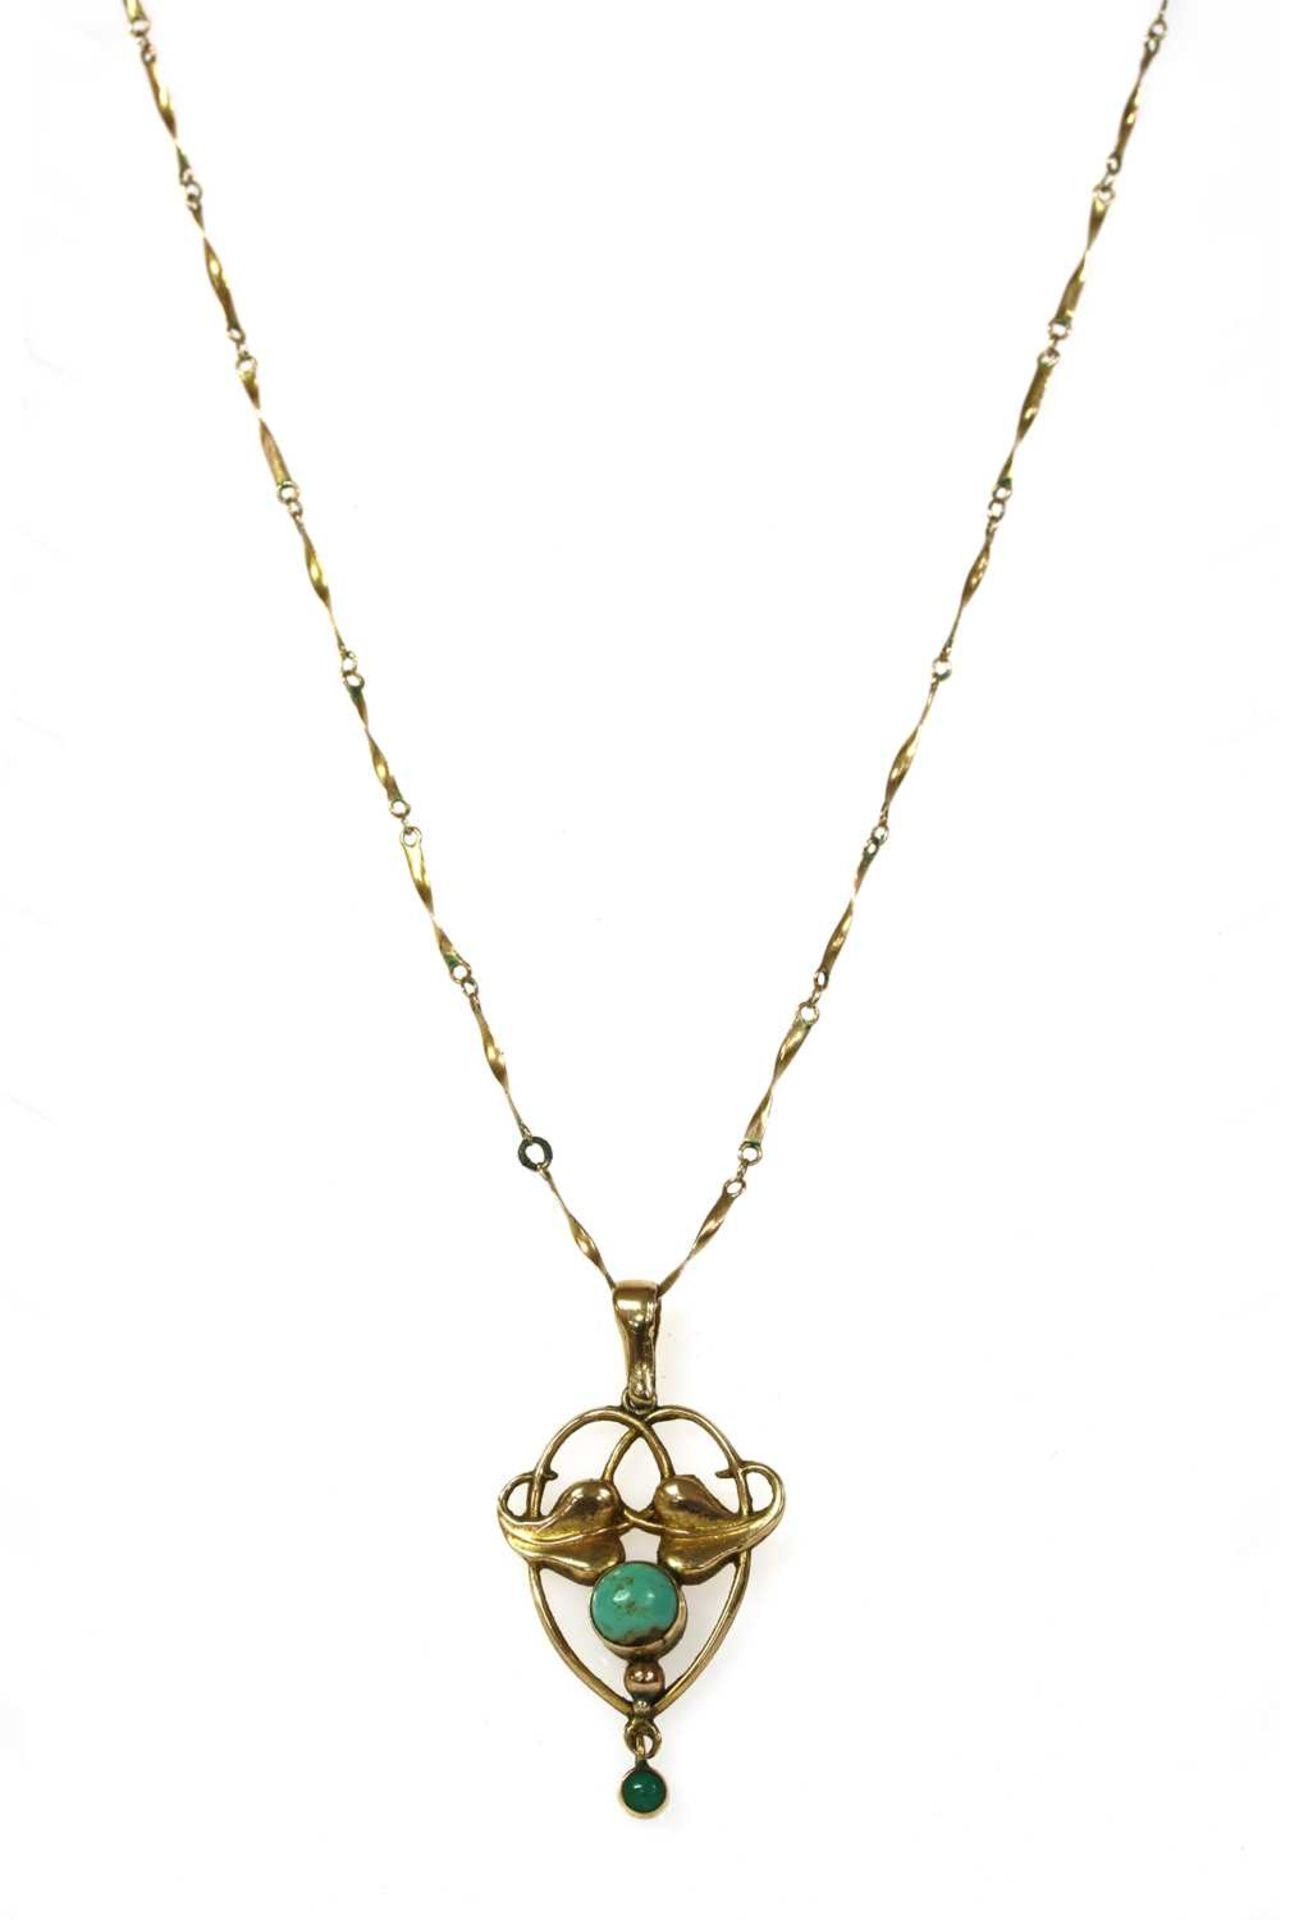 An Art Nouveau 9ct gold turquoise pendant, by Henry Matthews,